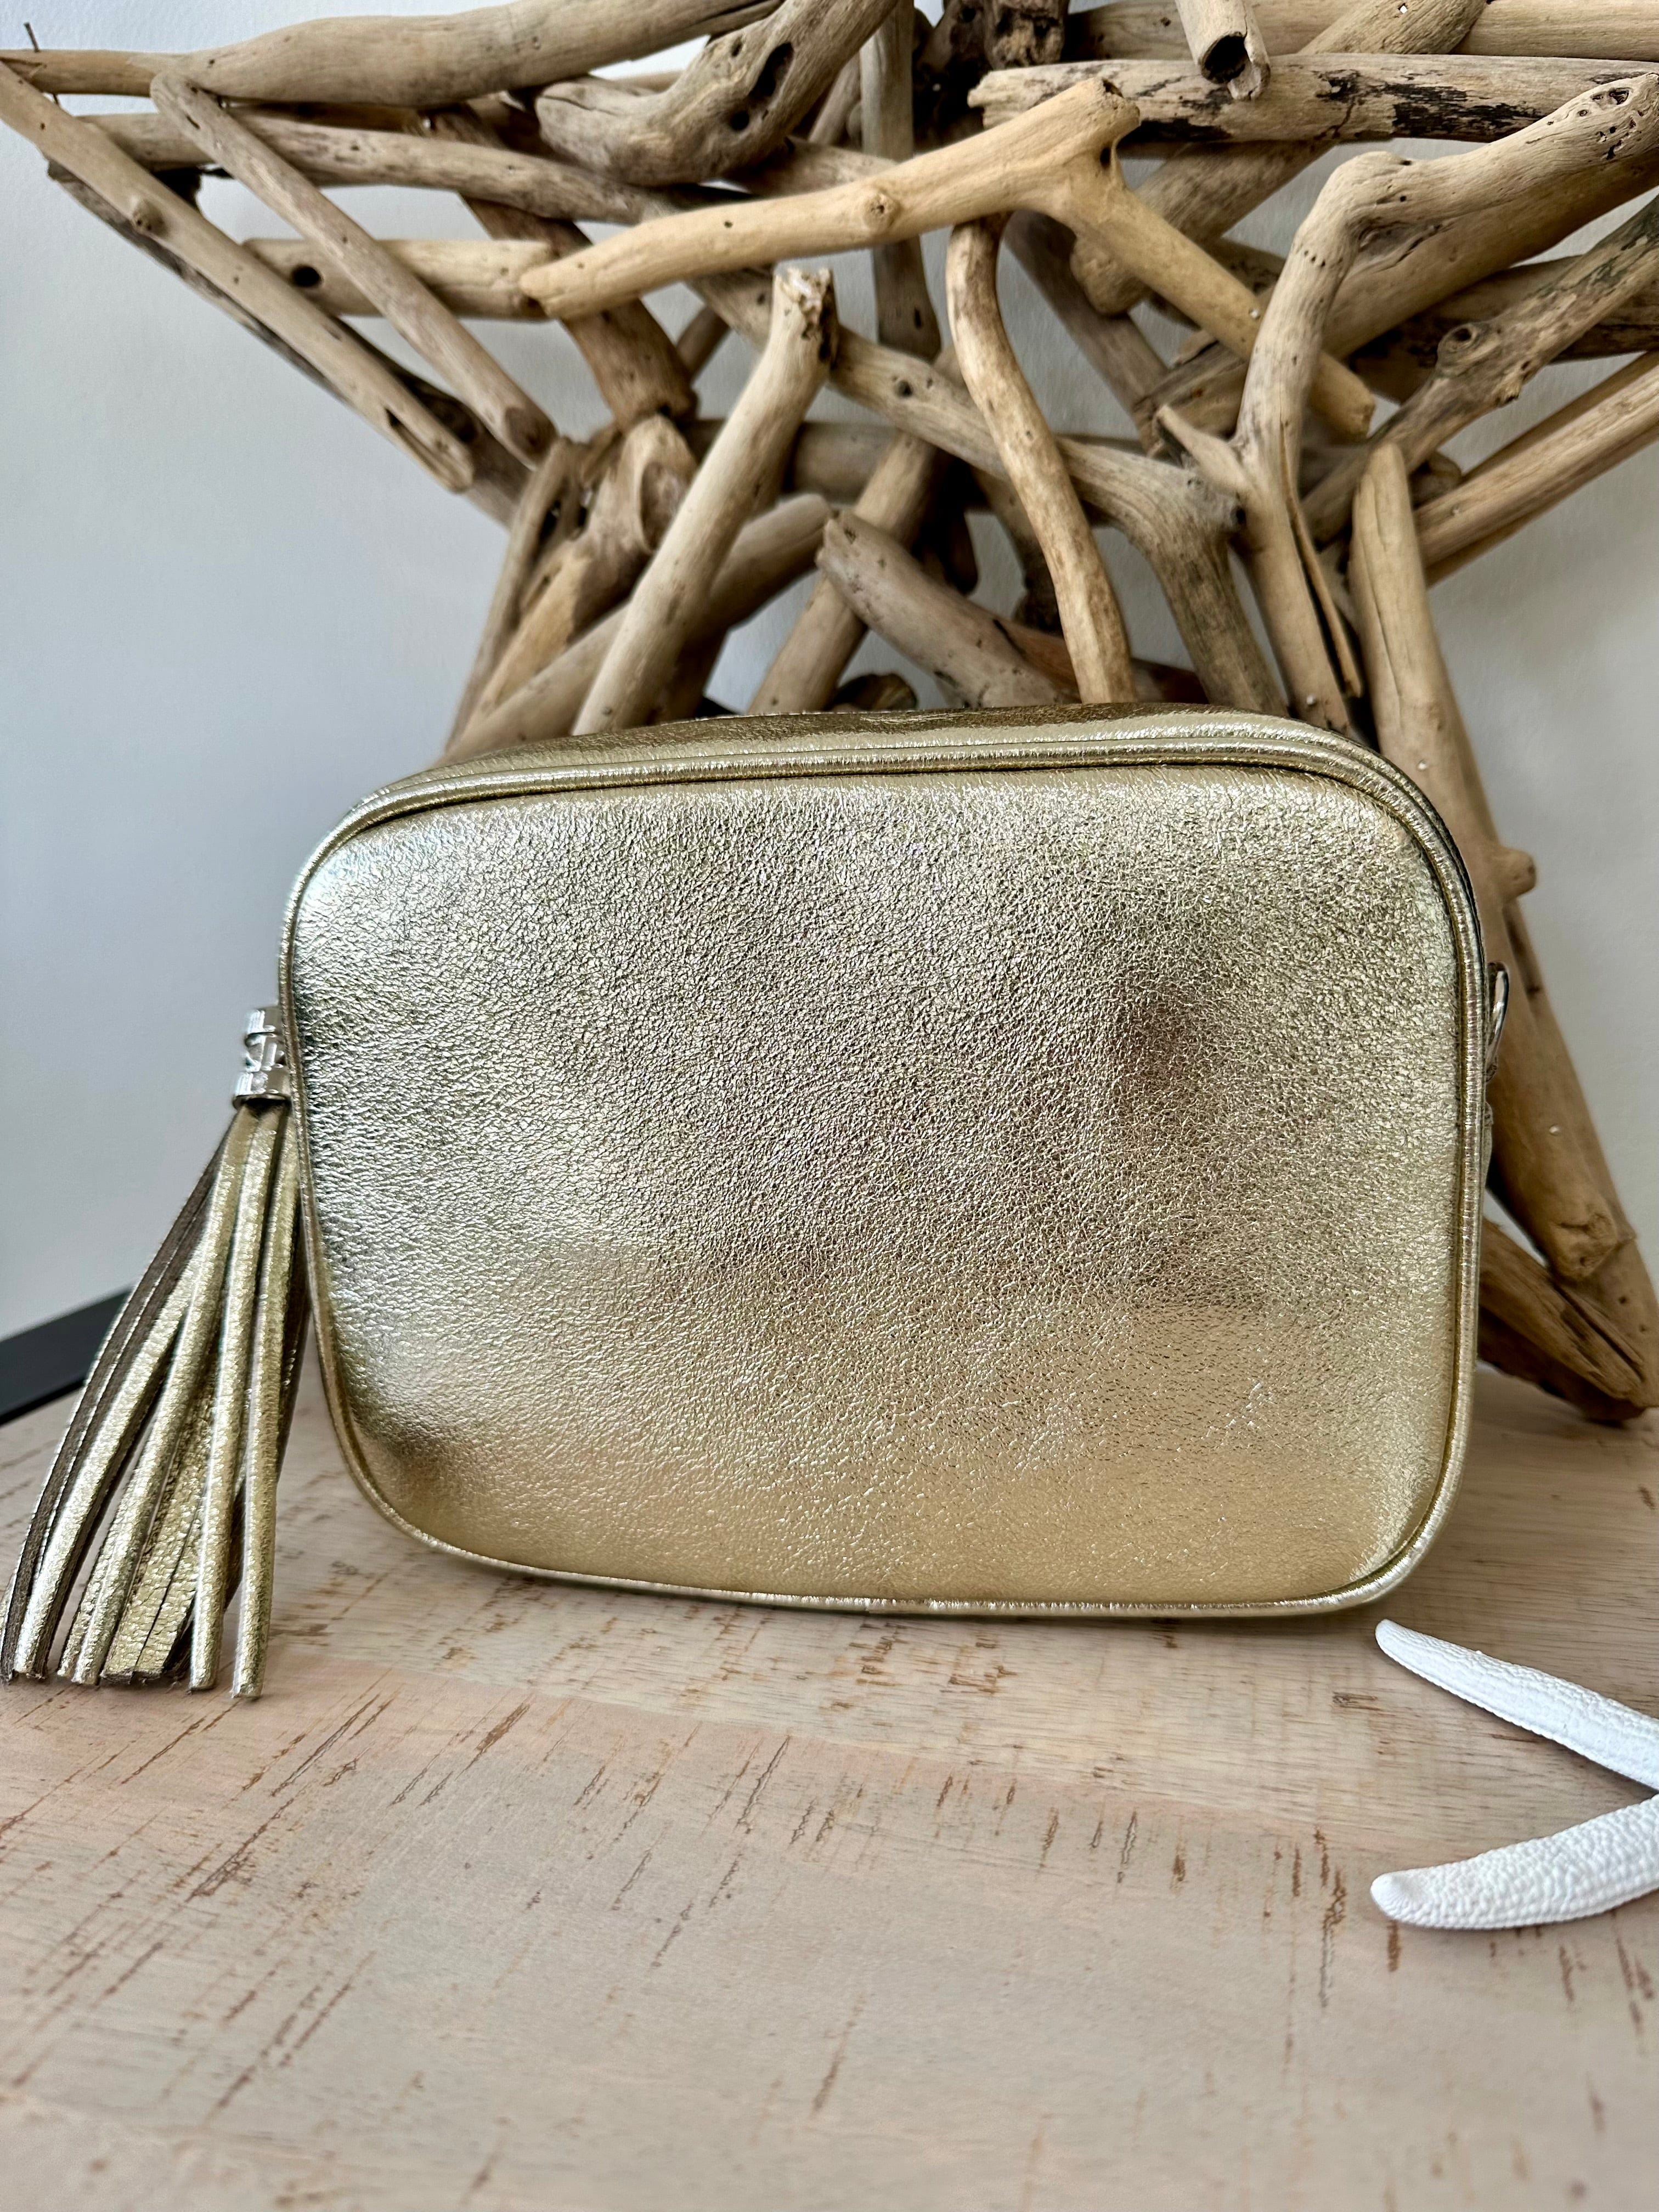 lusciousscarves Metallic Gold Italian Leather Camera Bag Style Crossbody Bag Summer Range